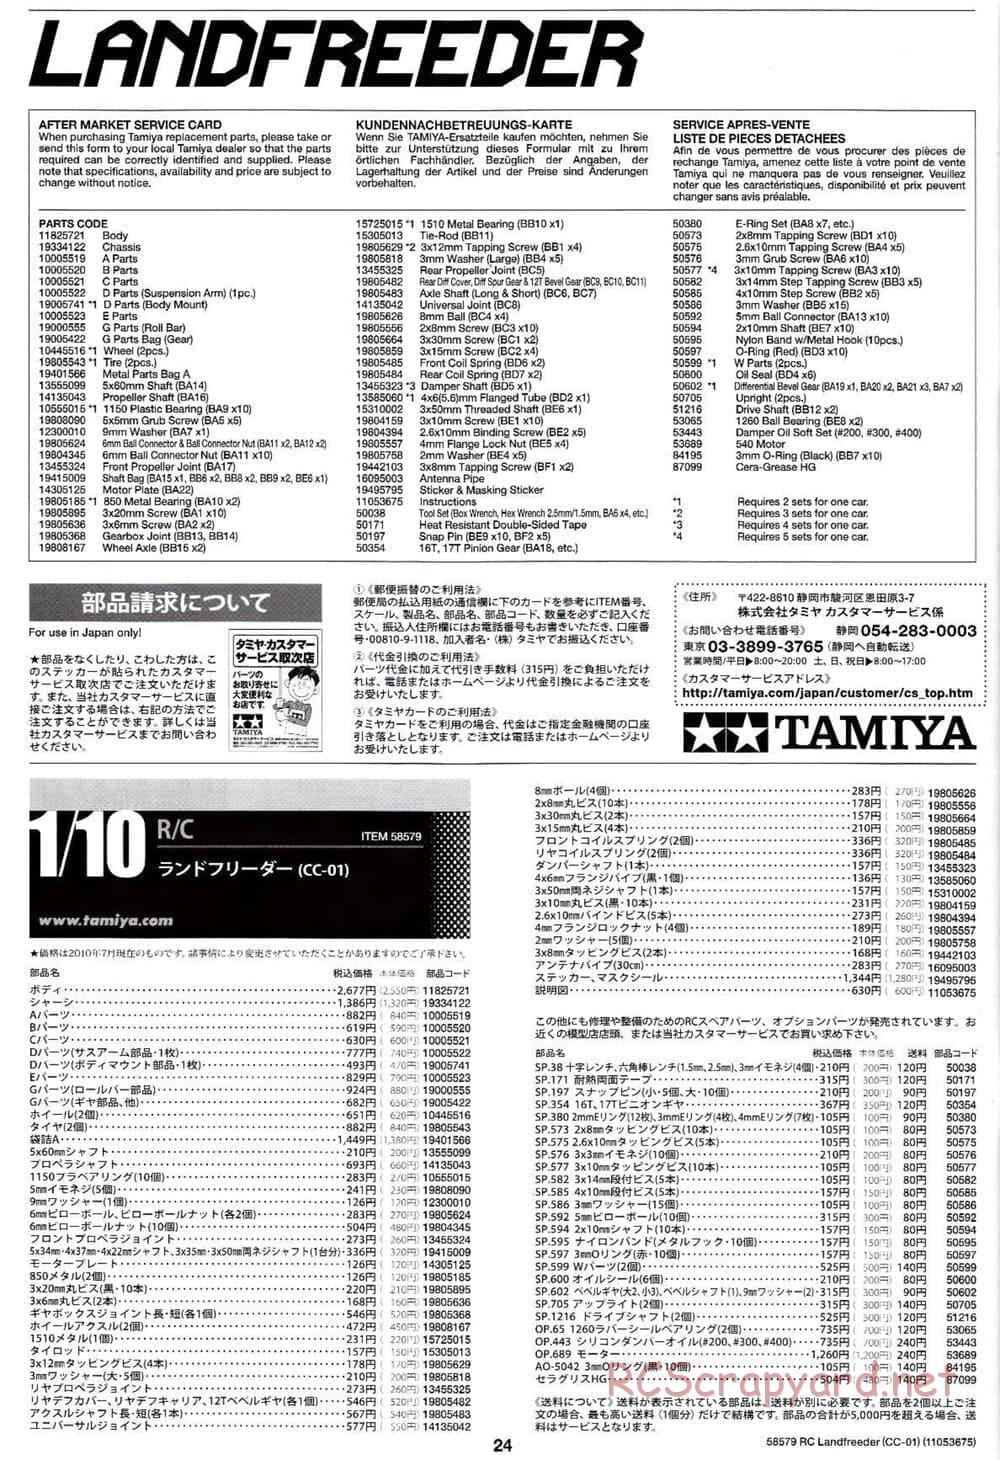 Tamiya - LandFreeder - CC-01 Chassis - Manual - Page 24